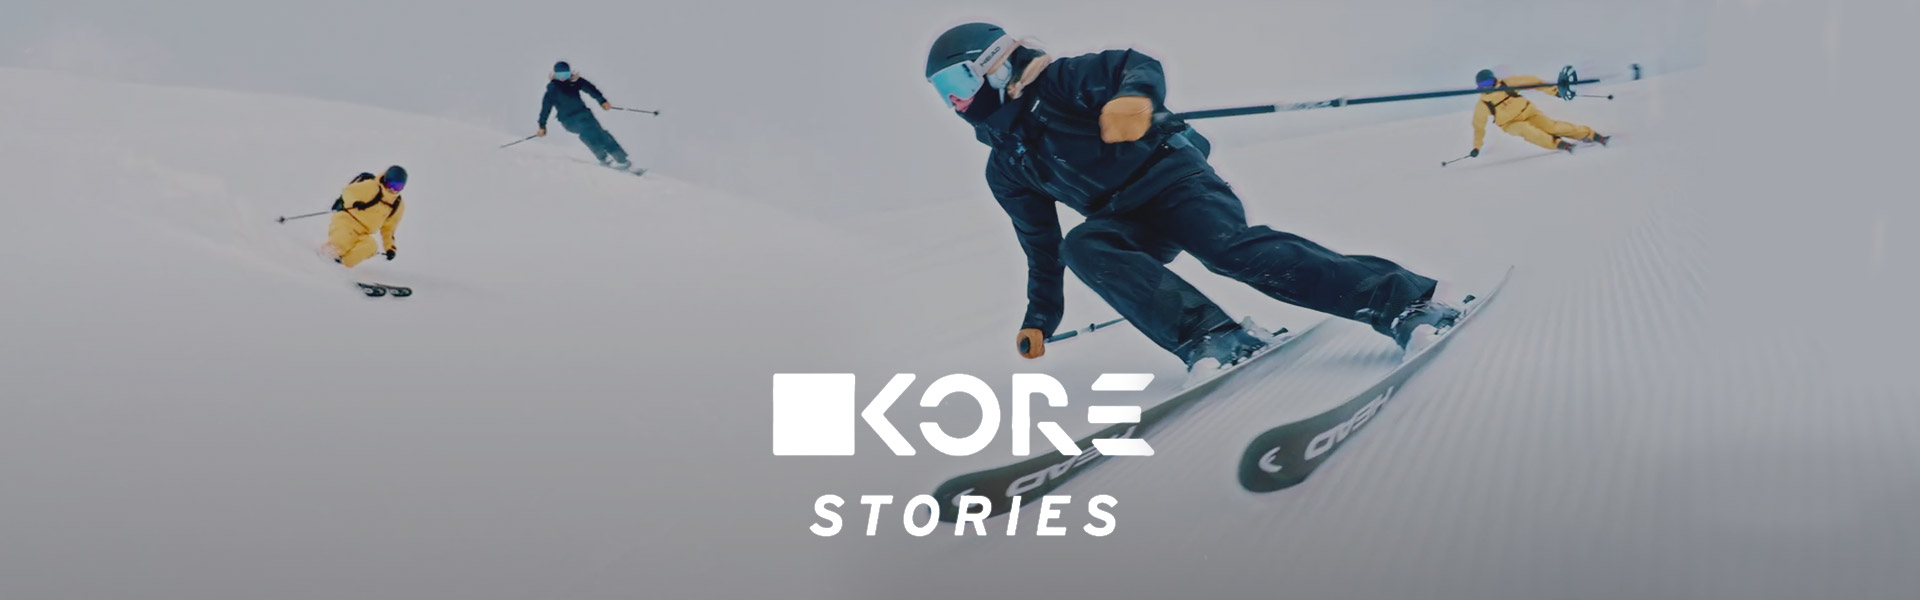 KORE Stories: les warriors du week-end